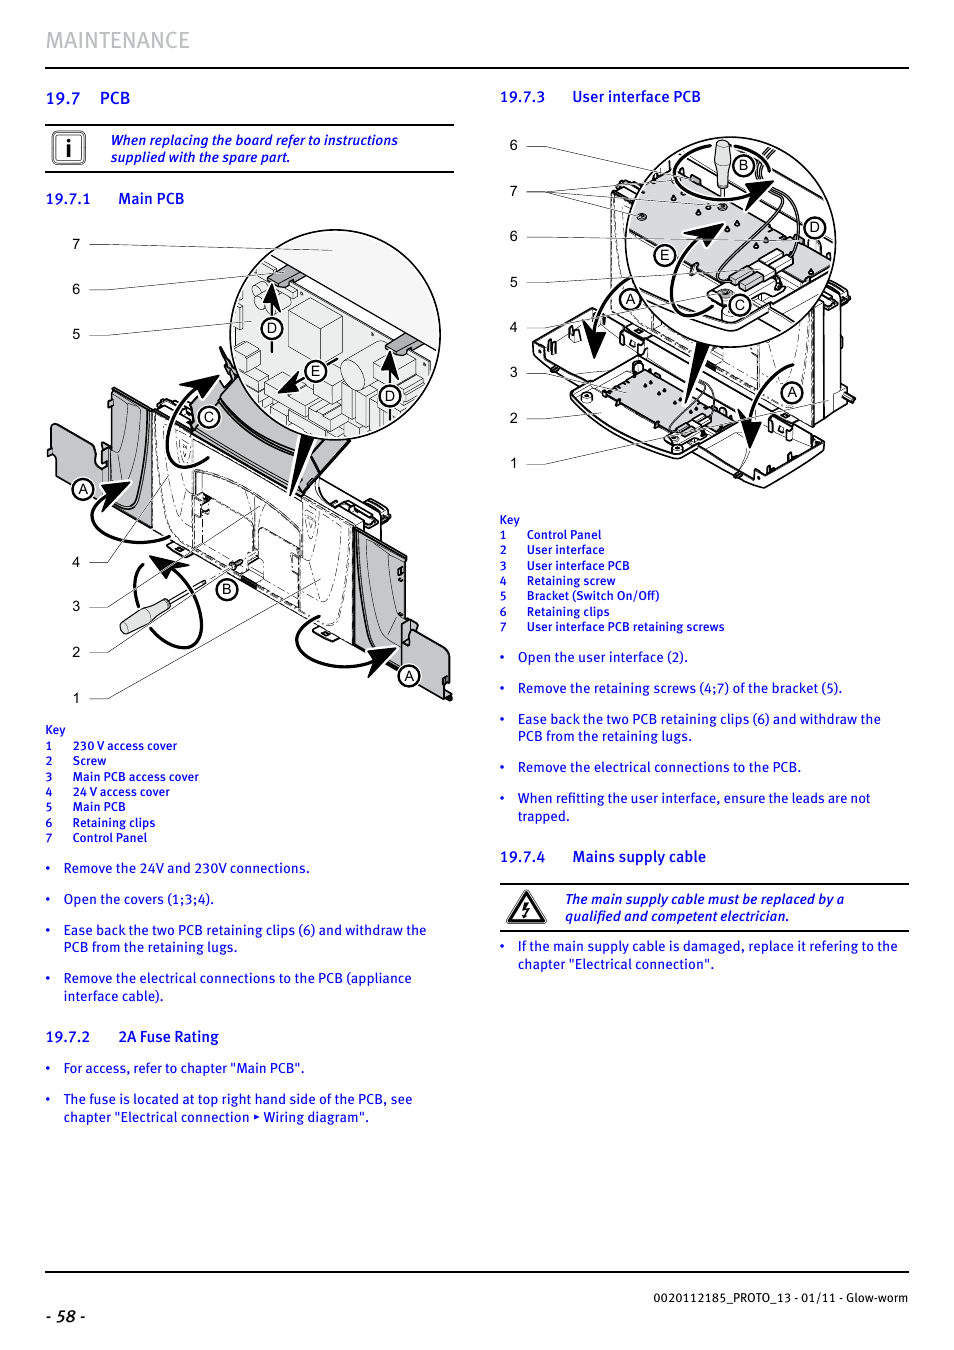 Maintenance | Glow-worm Ultracom2 35 Store User Manual | Page 60 / 68